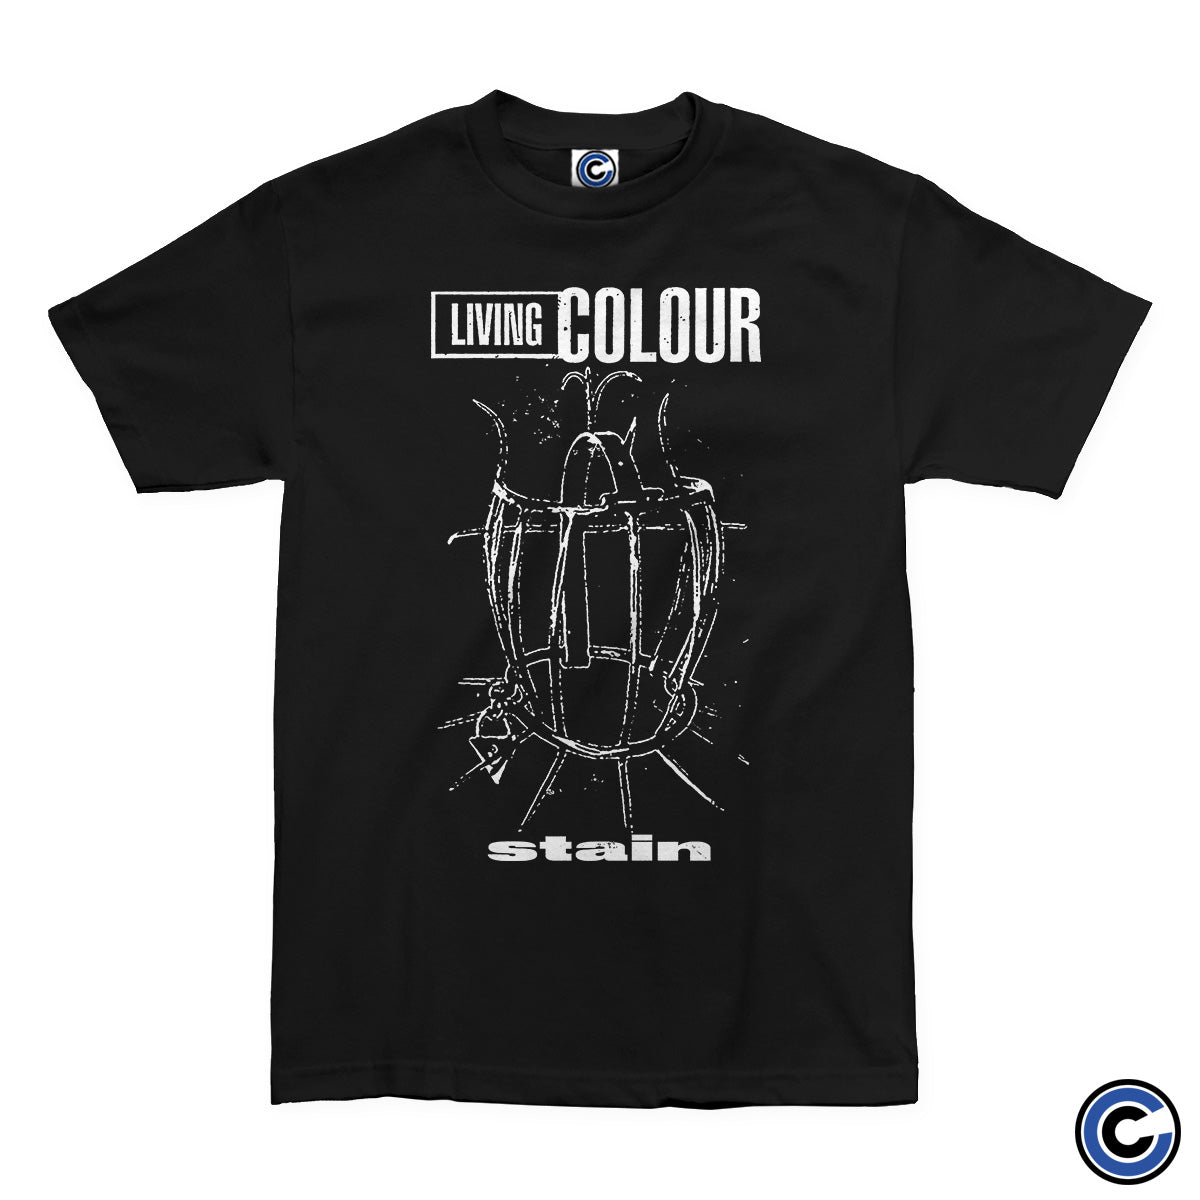 Living Colour "Outline Cage" Shirt